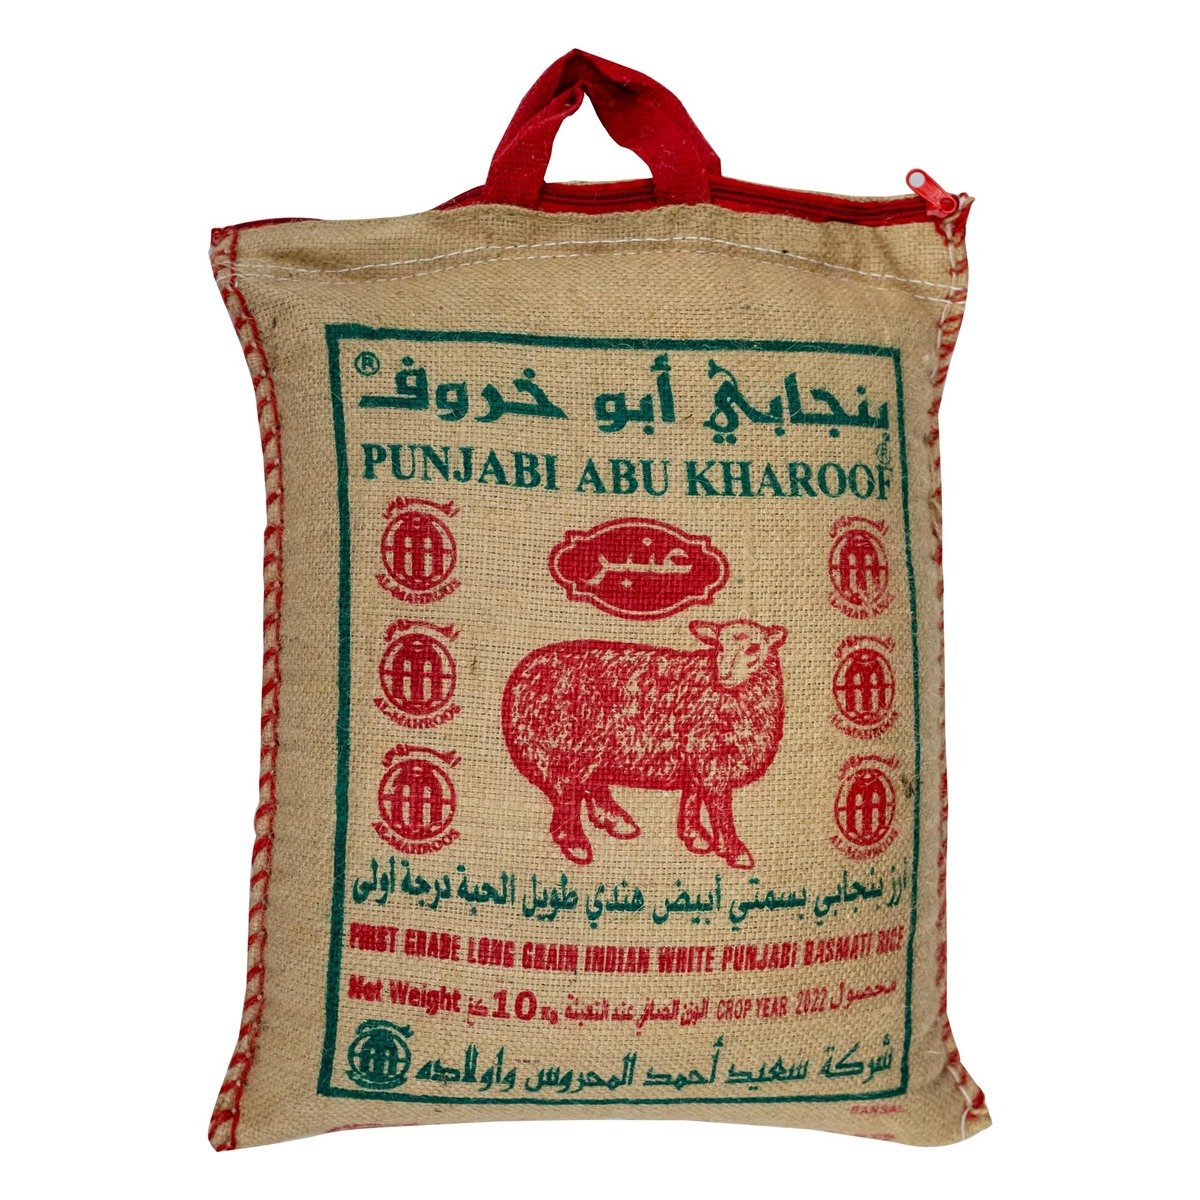 Abukharoof Punjabi Basmati Rice 10 kg